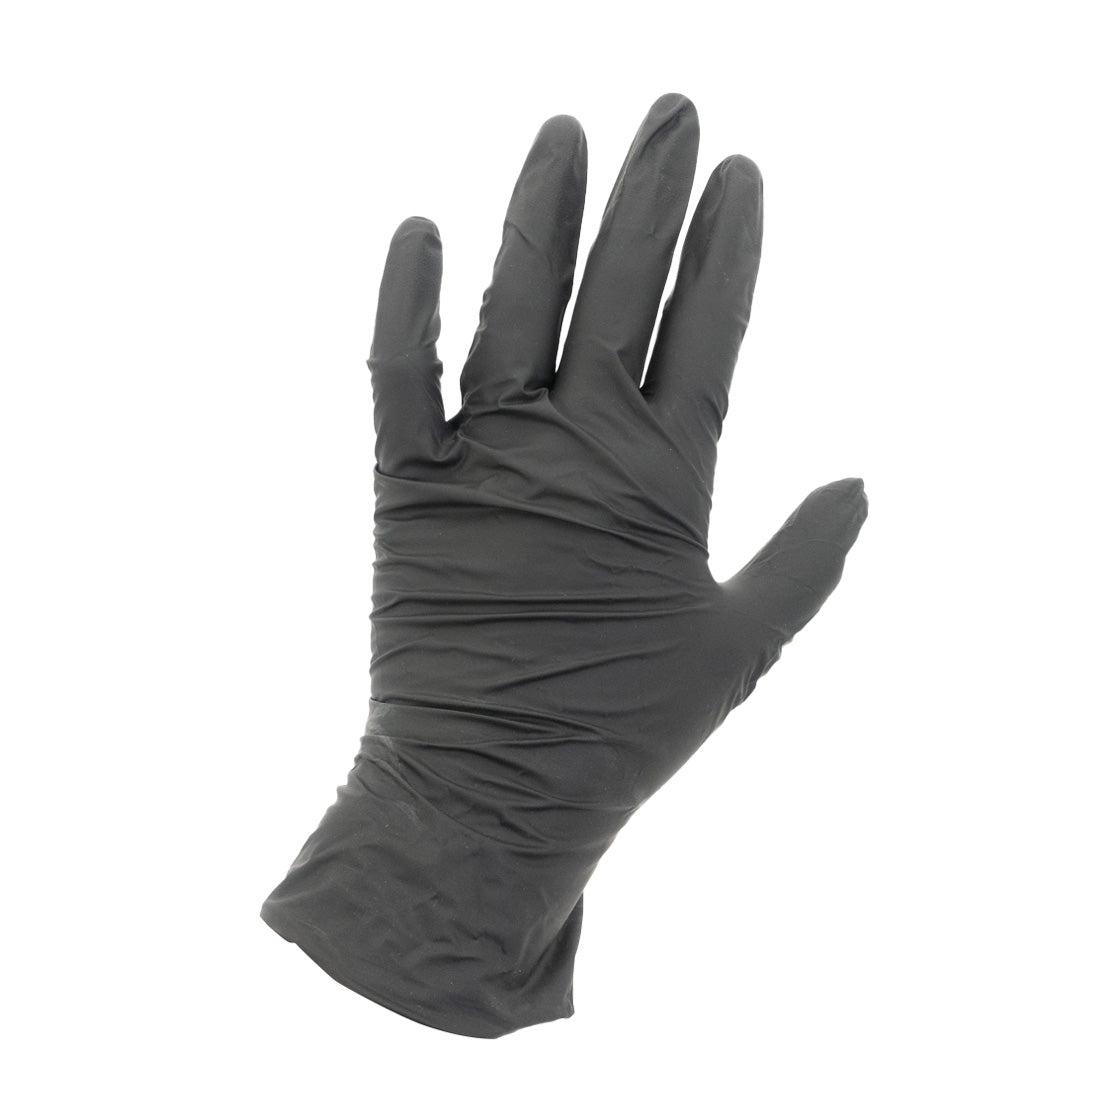 Tronex 9047 Nitrile Powder-Free Black Exam Glove Product View